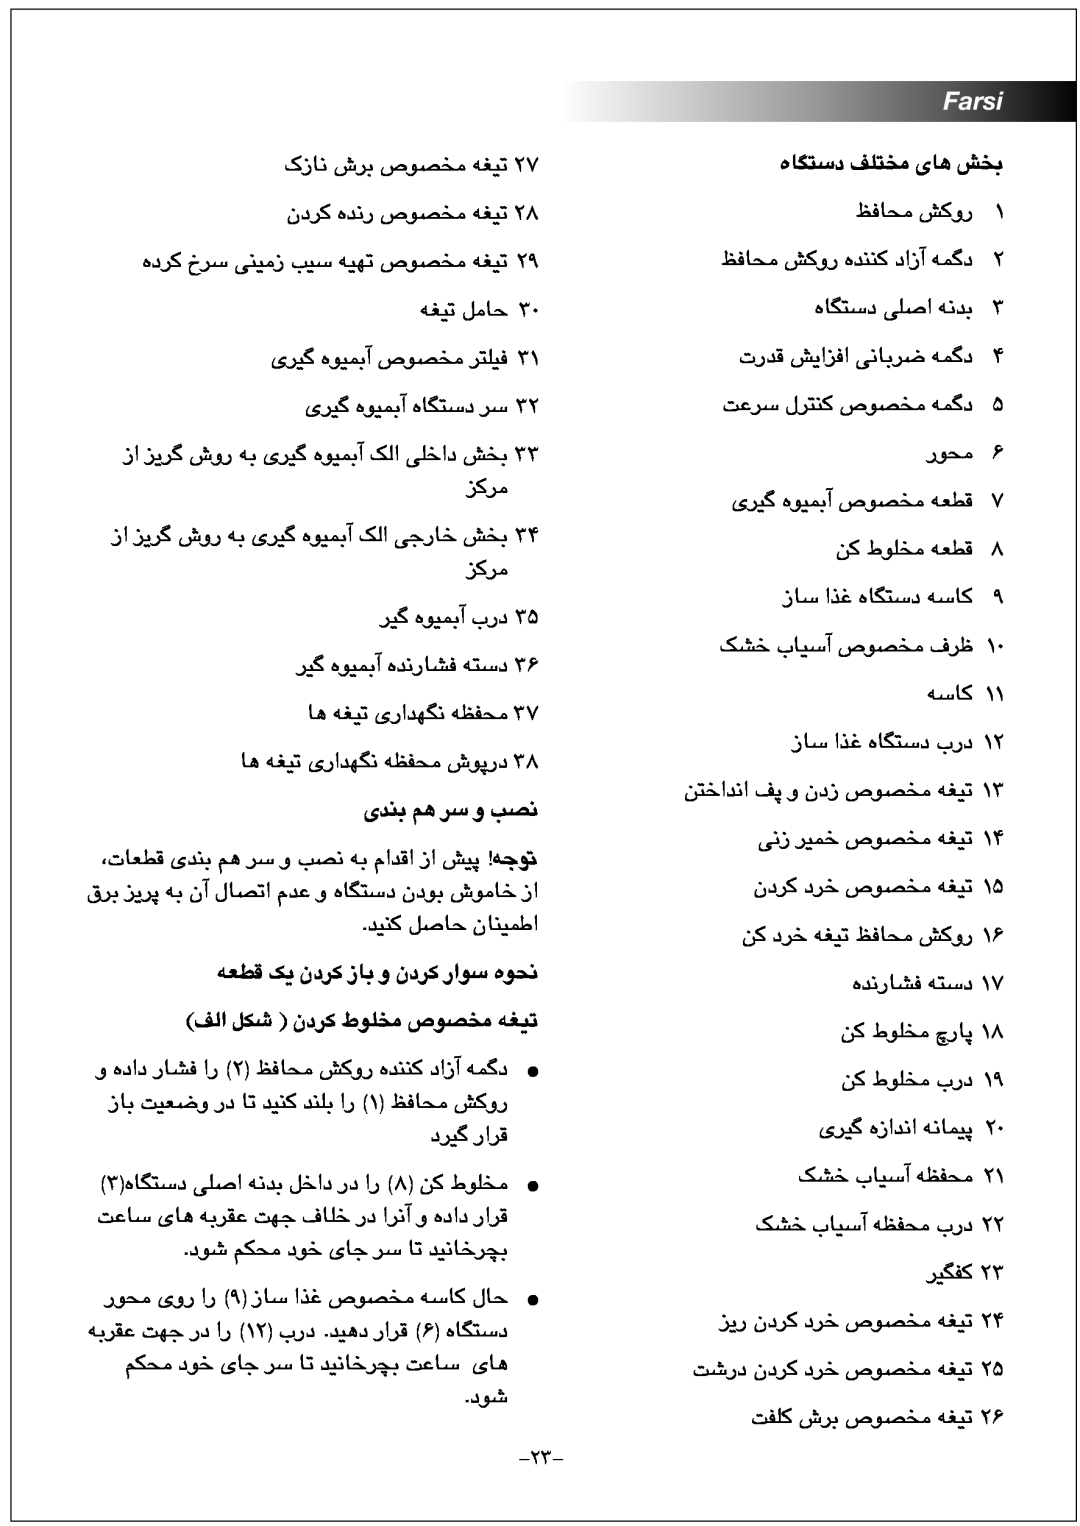 Black & Decker FX1000 manual ﯼﺪﻨﺑ ﻢﻫ ﺮﺳ ﻭ ﺐﺼﻧ, ﻪﻌﻄﻗ ﮏﯾ ﻥﺩﺮﮐ ﺯﺎﺑ ﻭ ﻥﺩﺮﮐ ﺭﺍﻮﺳ ﻩﻮﺤﻧ ﻒﻟﺍ ﻞﮑﺷ ﻥﺩﺮﮐ ﻁﻮﻠﺨﻣ ﺹﻮﺼﺨﻣ ﻪﻐﯿﺗ, Farsi 